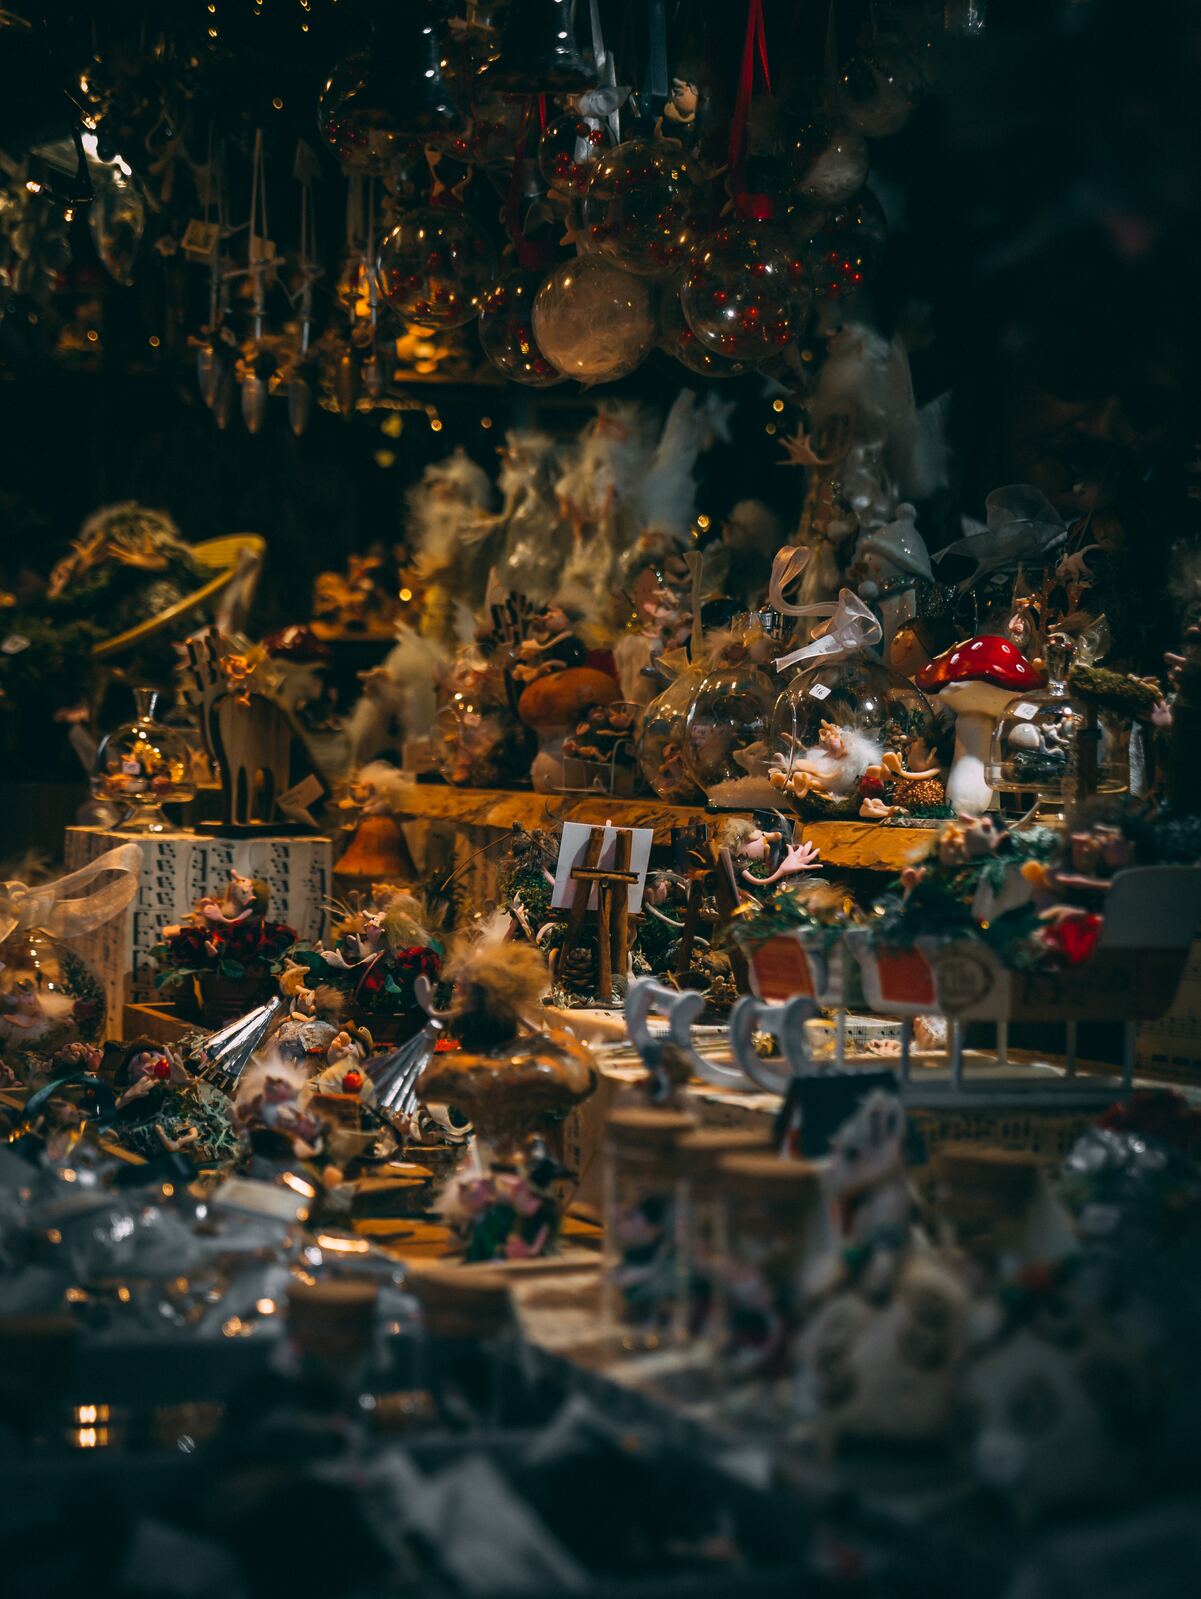 Image of Bruges Christmas Markets by Team PhotoHound